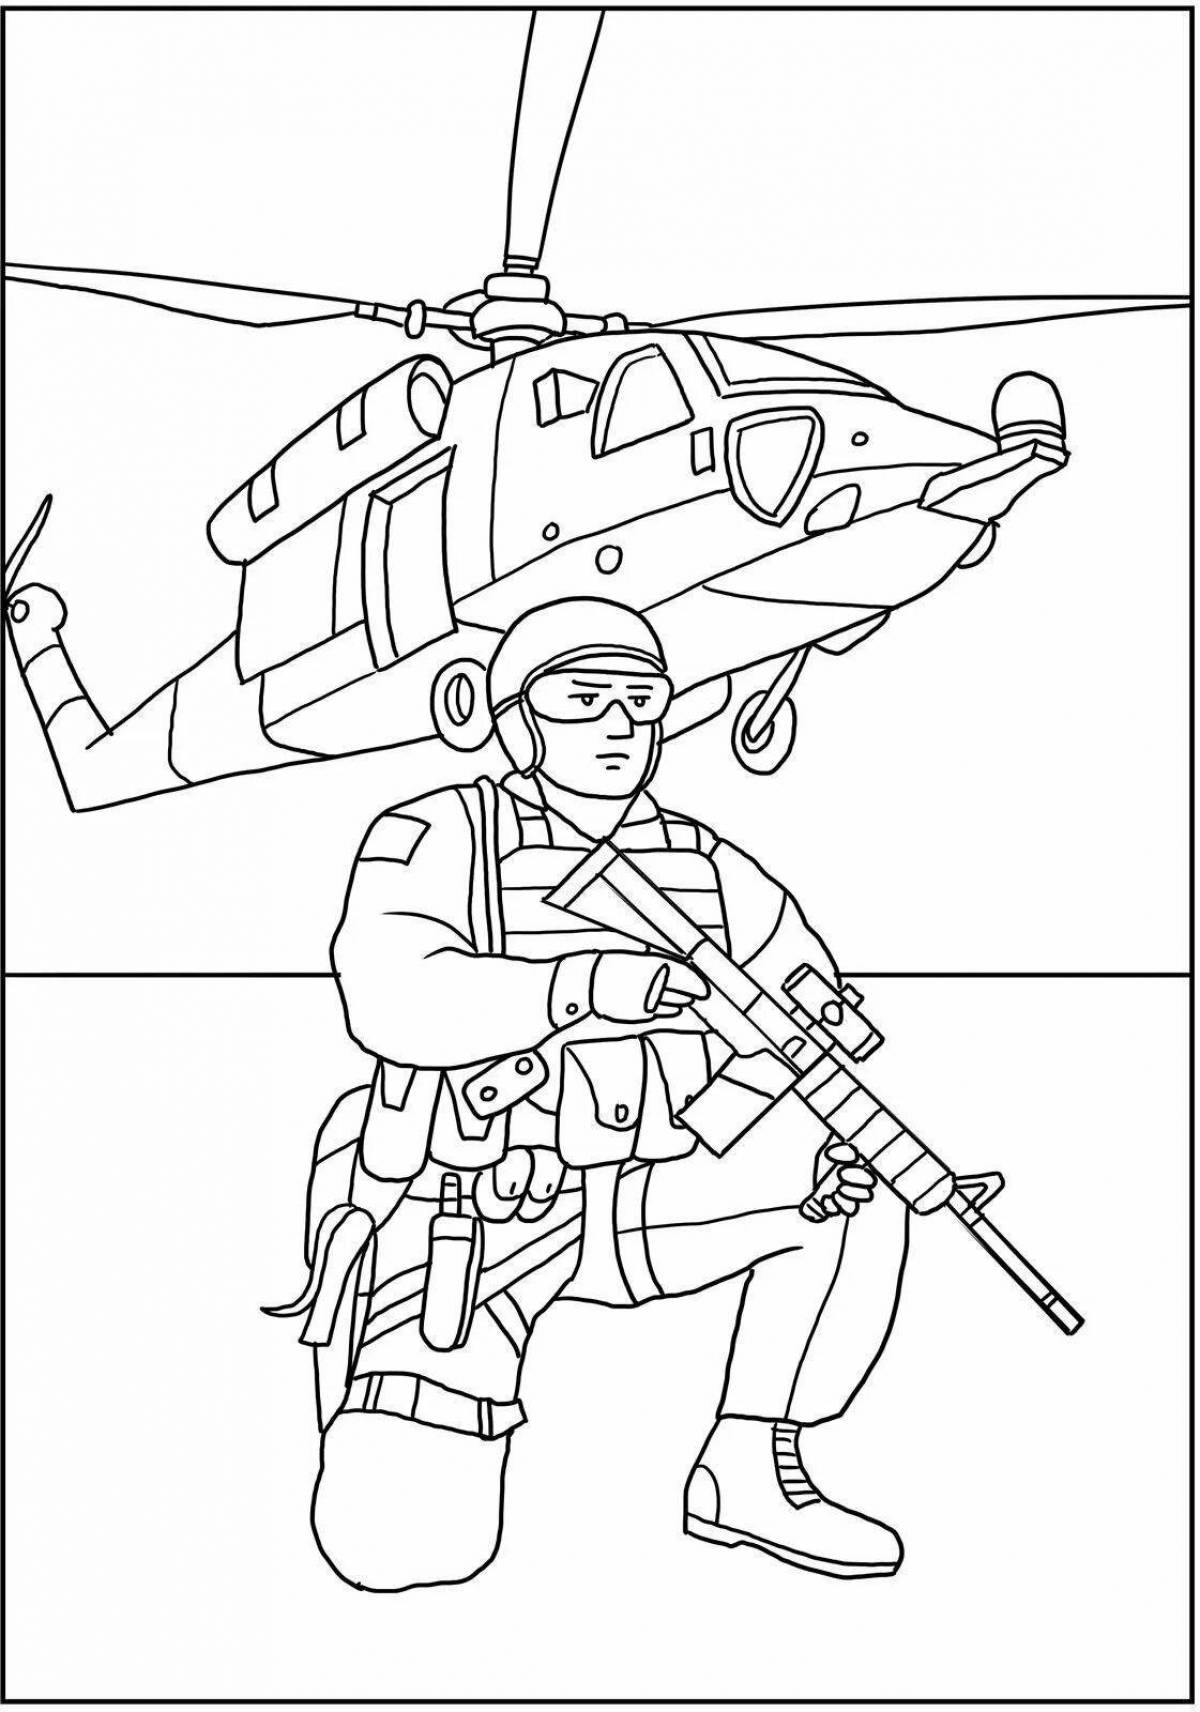 Impressive paratrooper coloring page